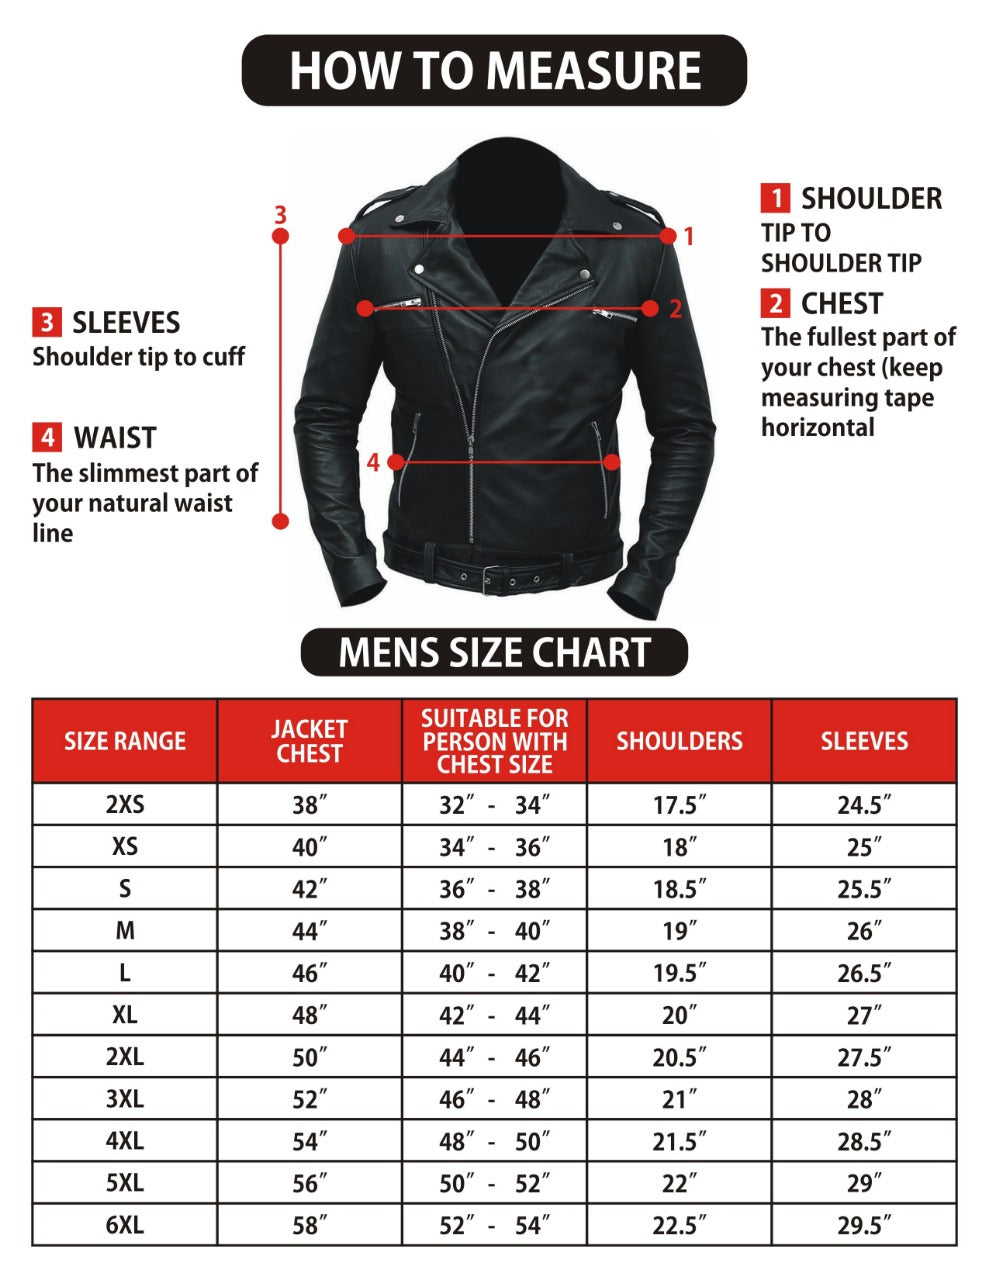 Spine Spark Men's Brown Soft Suede Leather Zipper Fashion Jacket